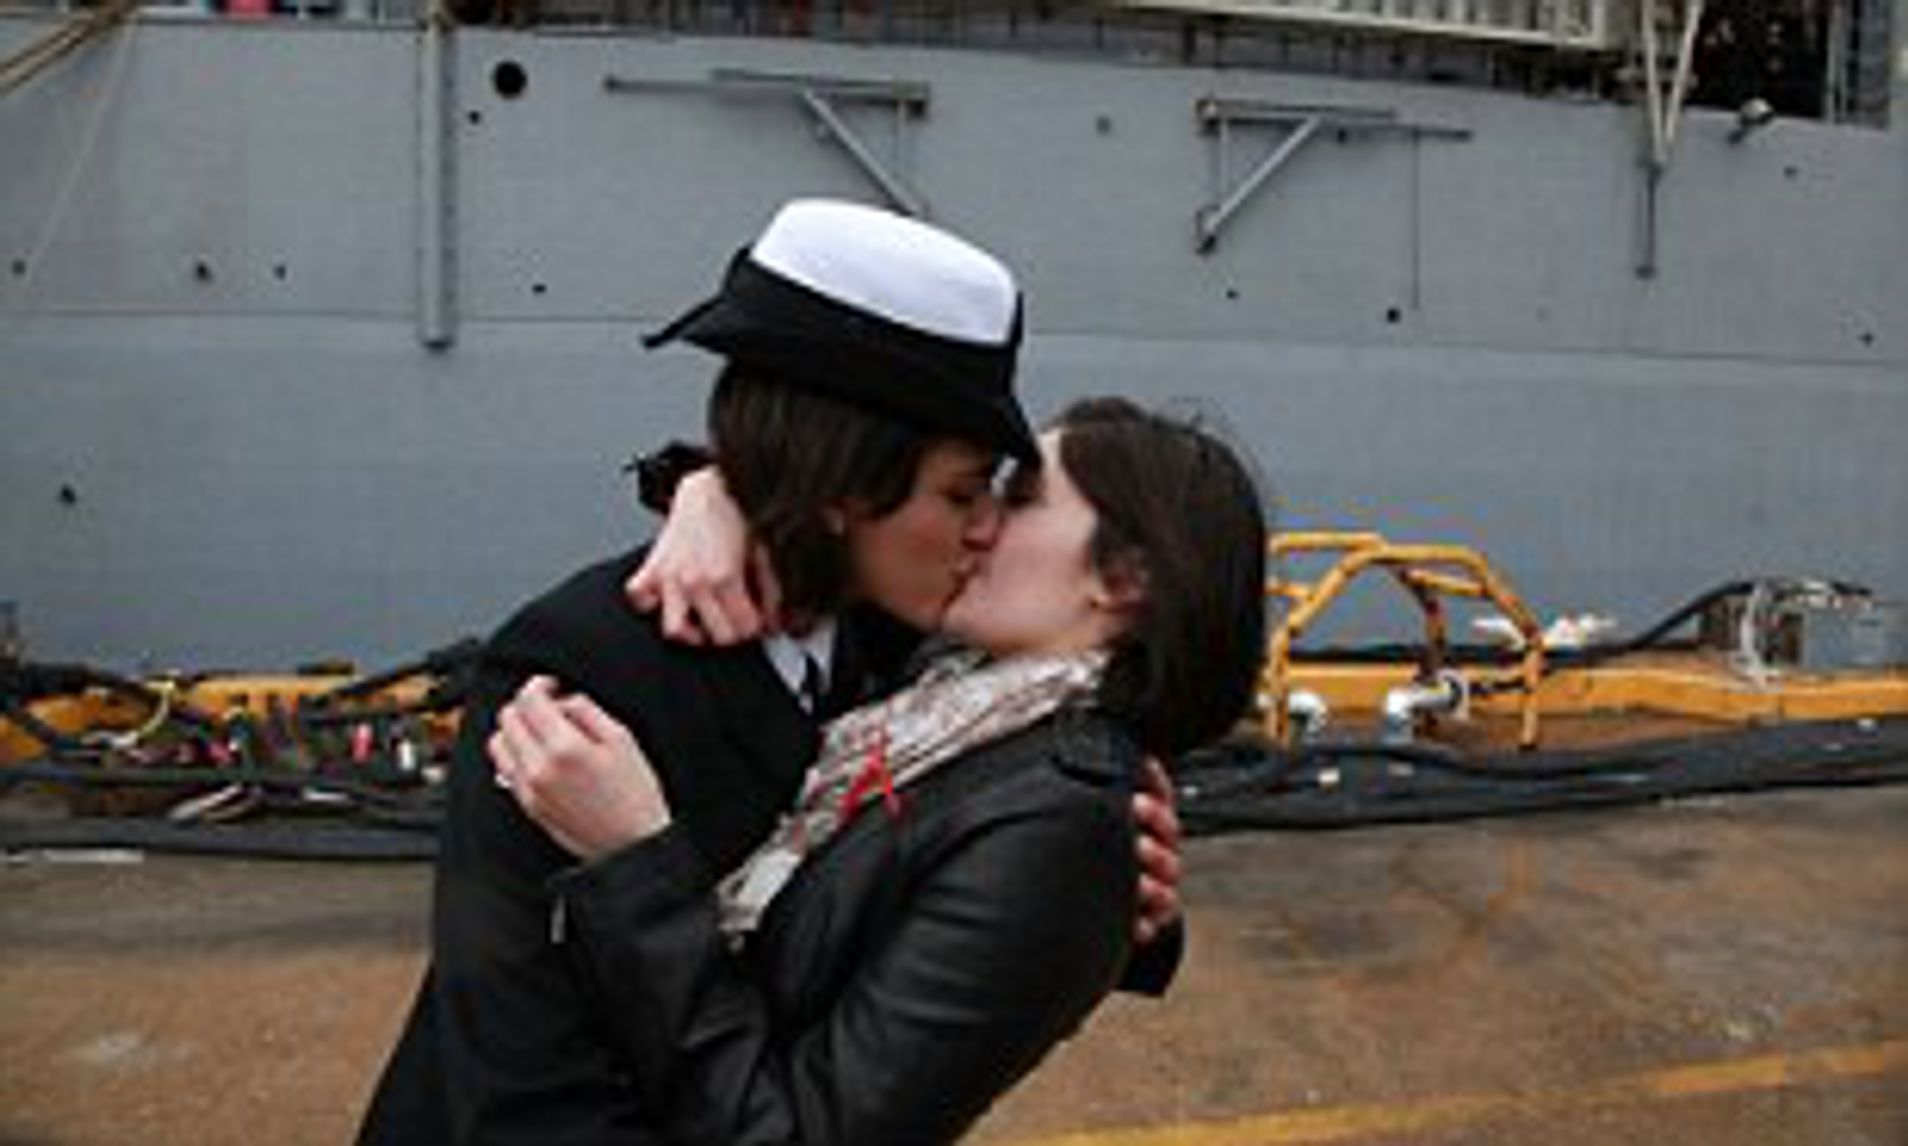 lesbian scenes military